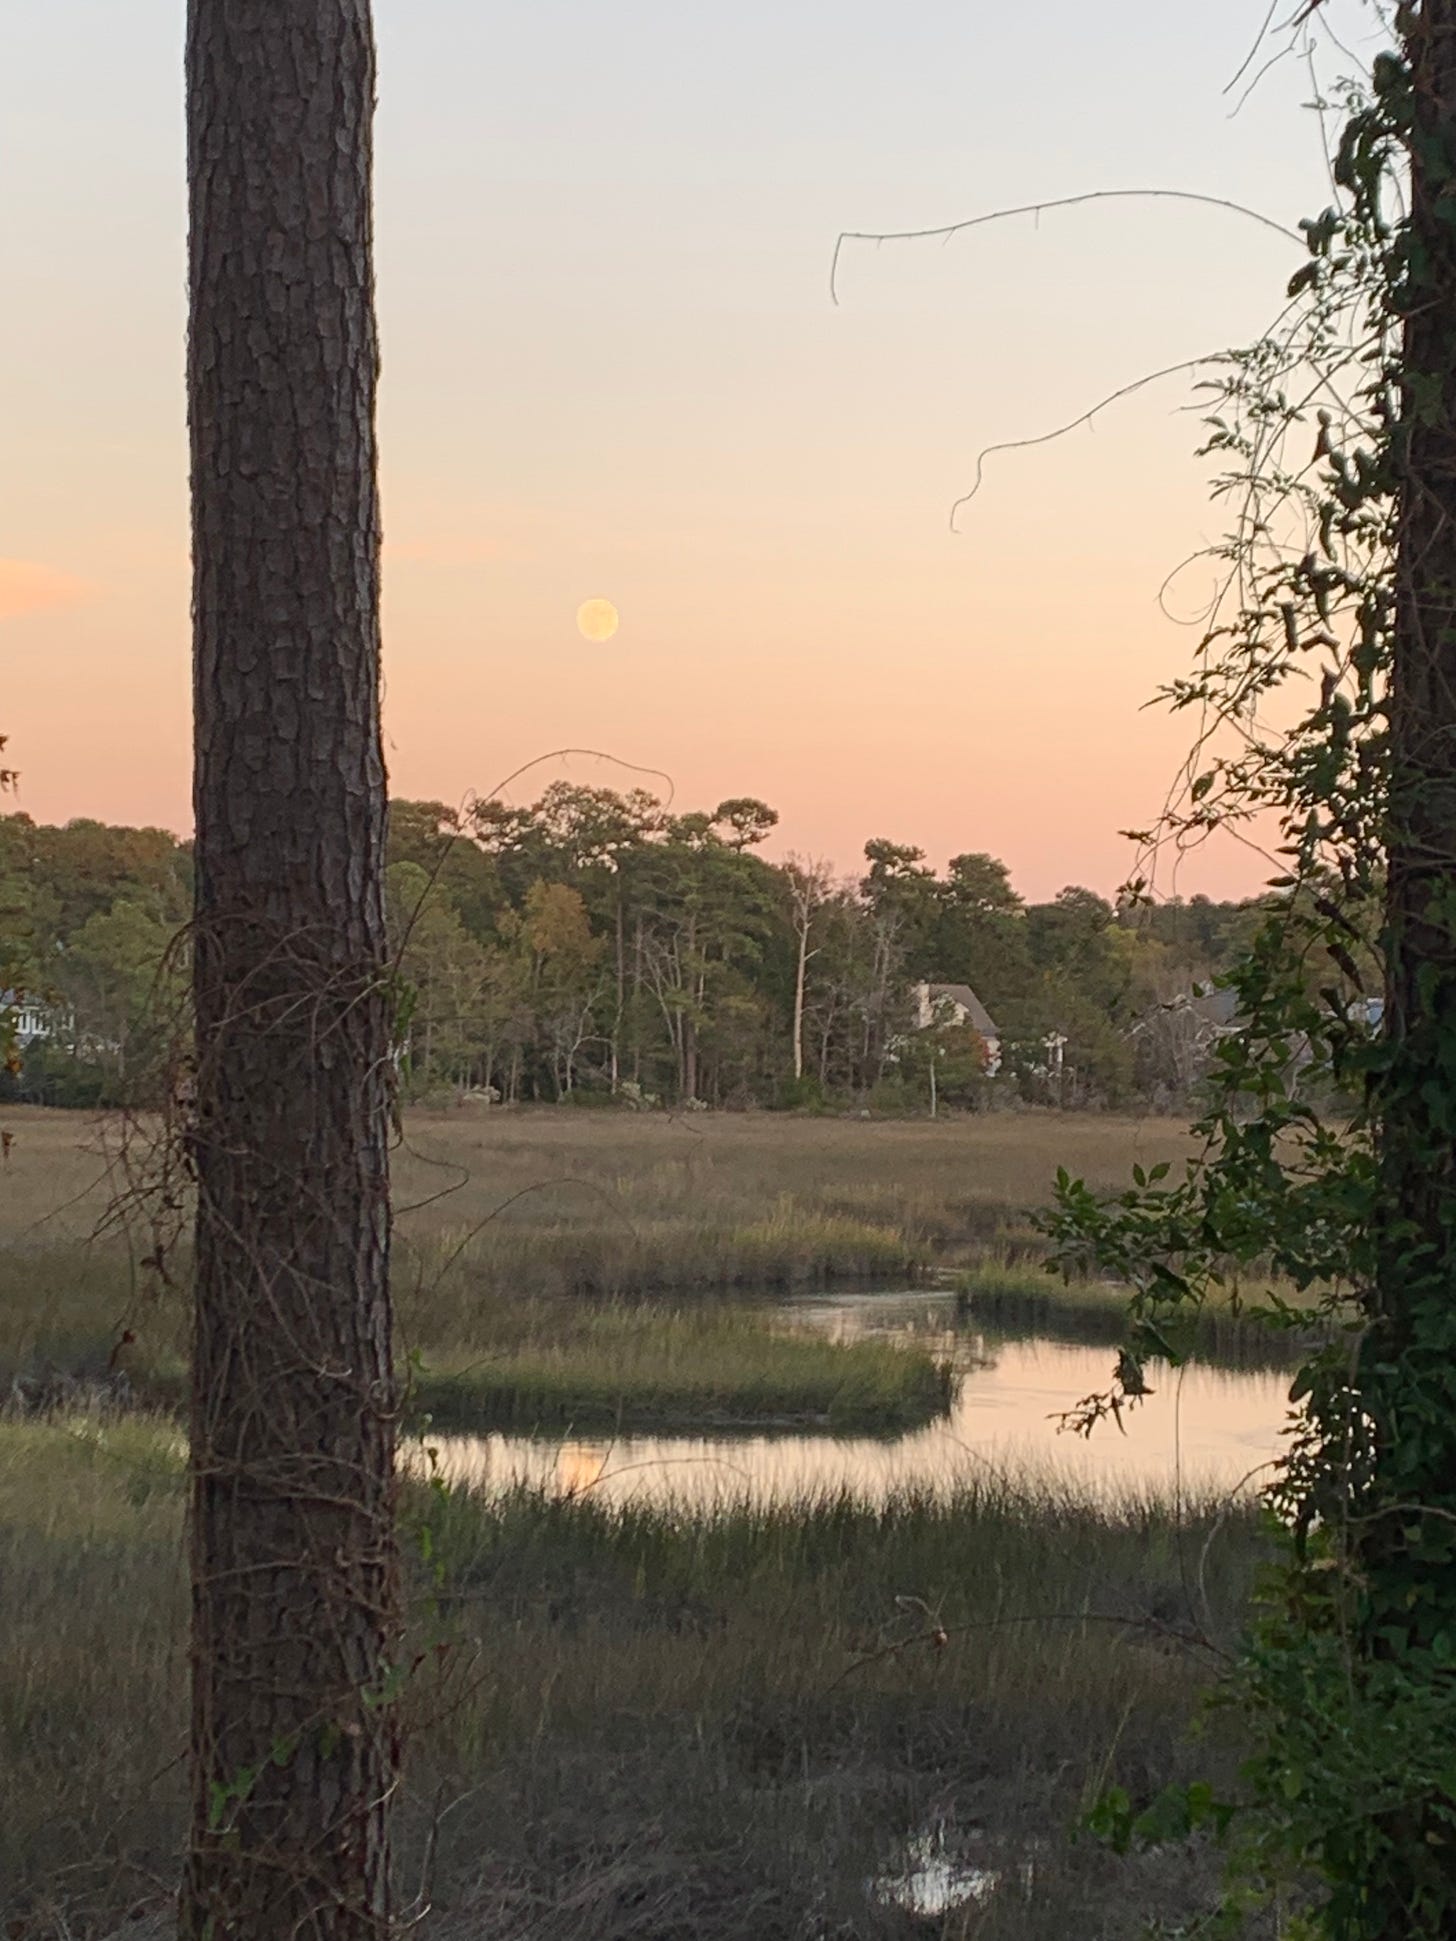 Moonrise in a pink-sky evening over a salt marsh.